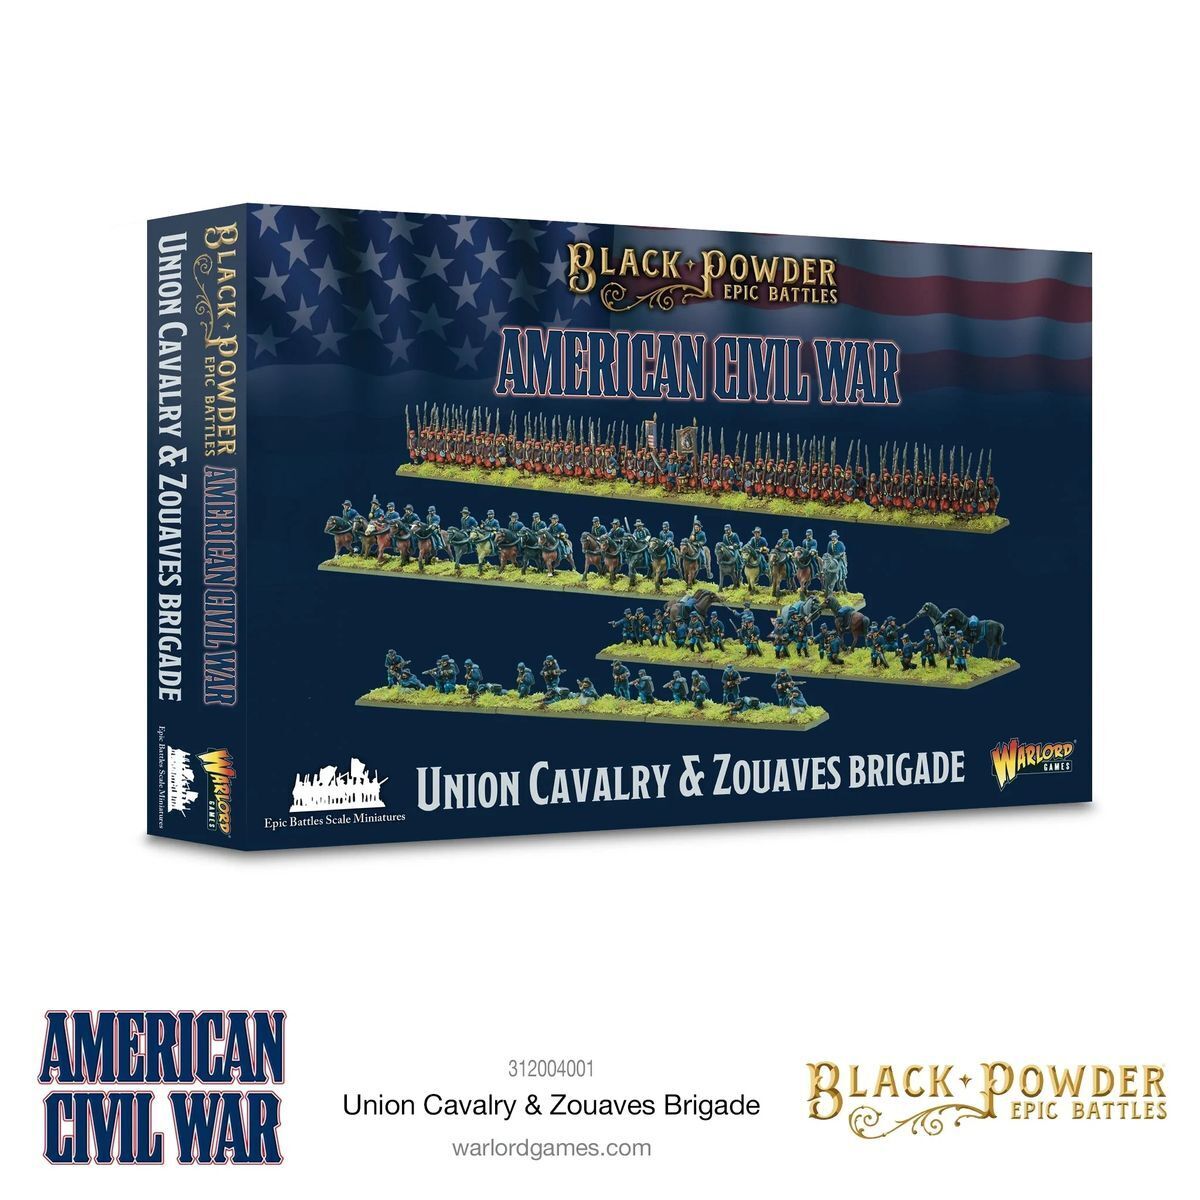 Black Powder: Epic Battles - American Civil War Union Cavalry & Zouaves Brigade